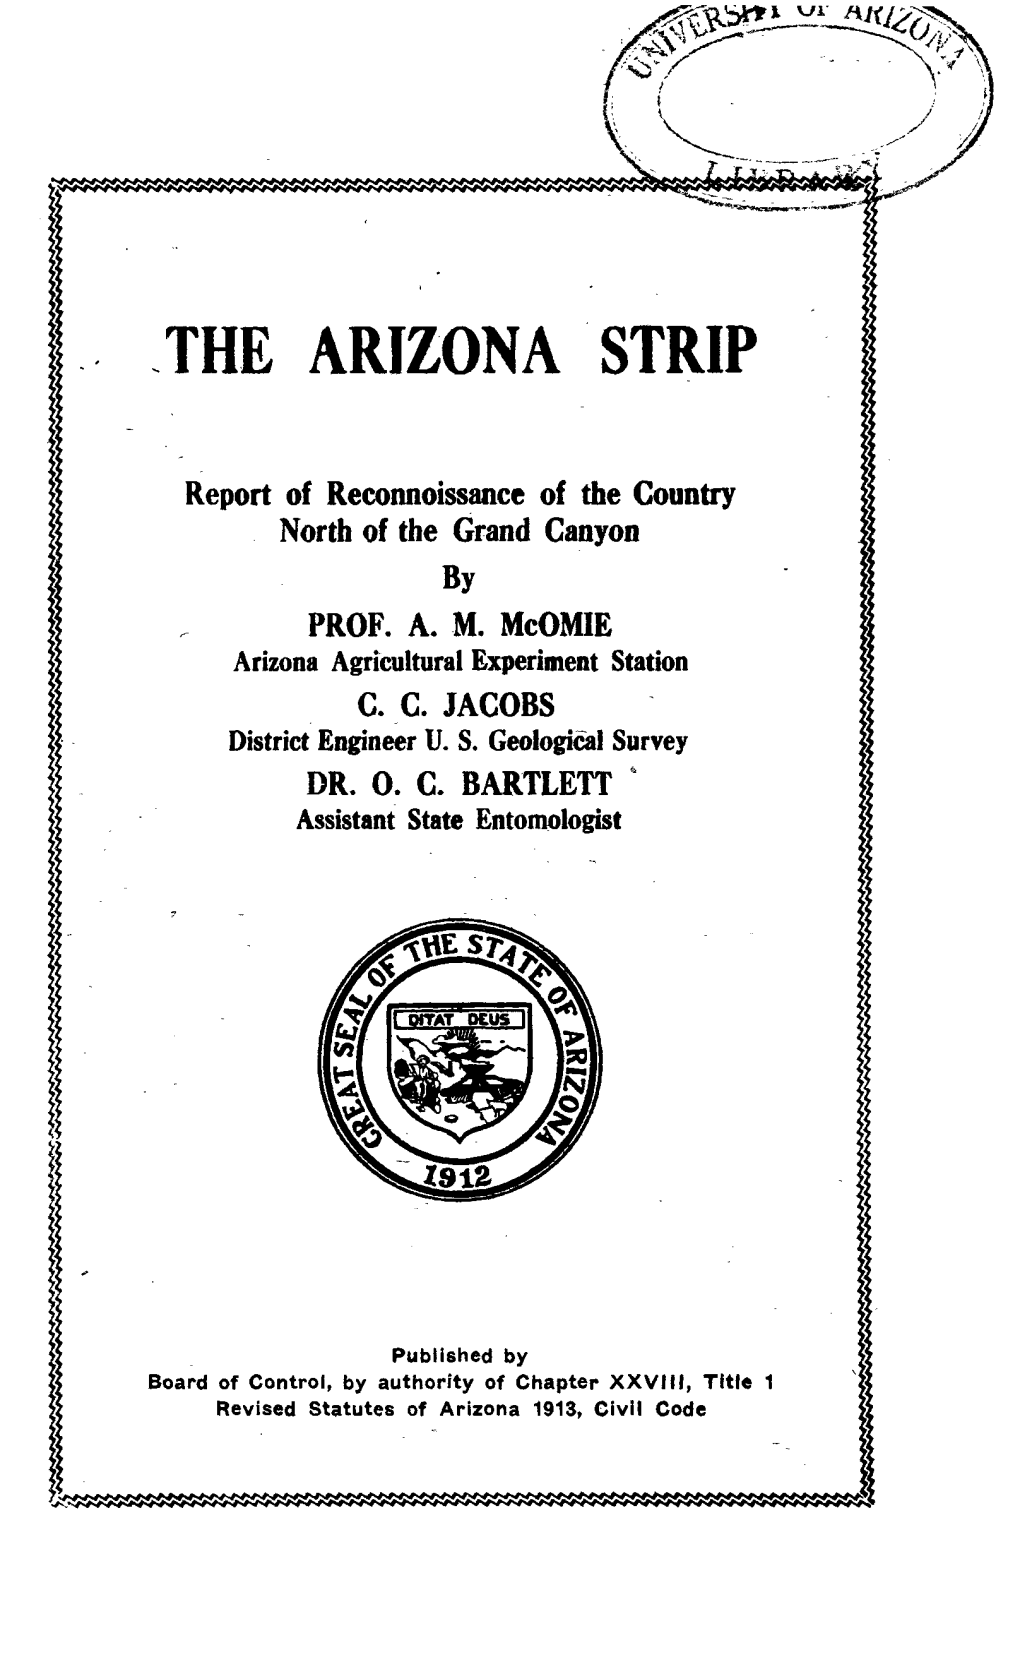 The Arizona Strip